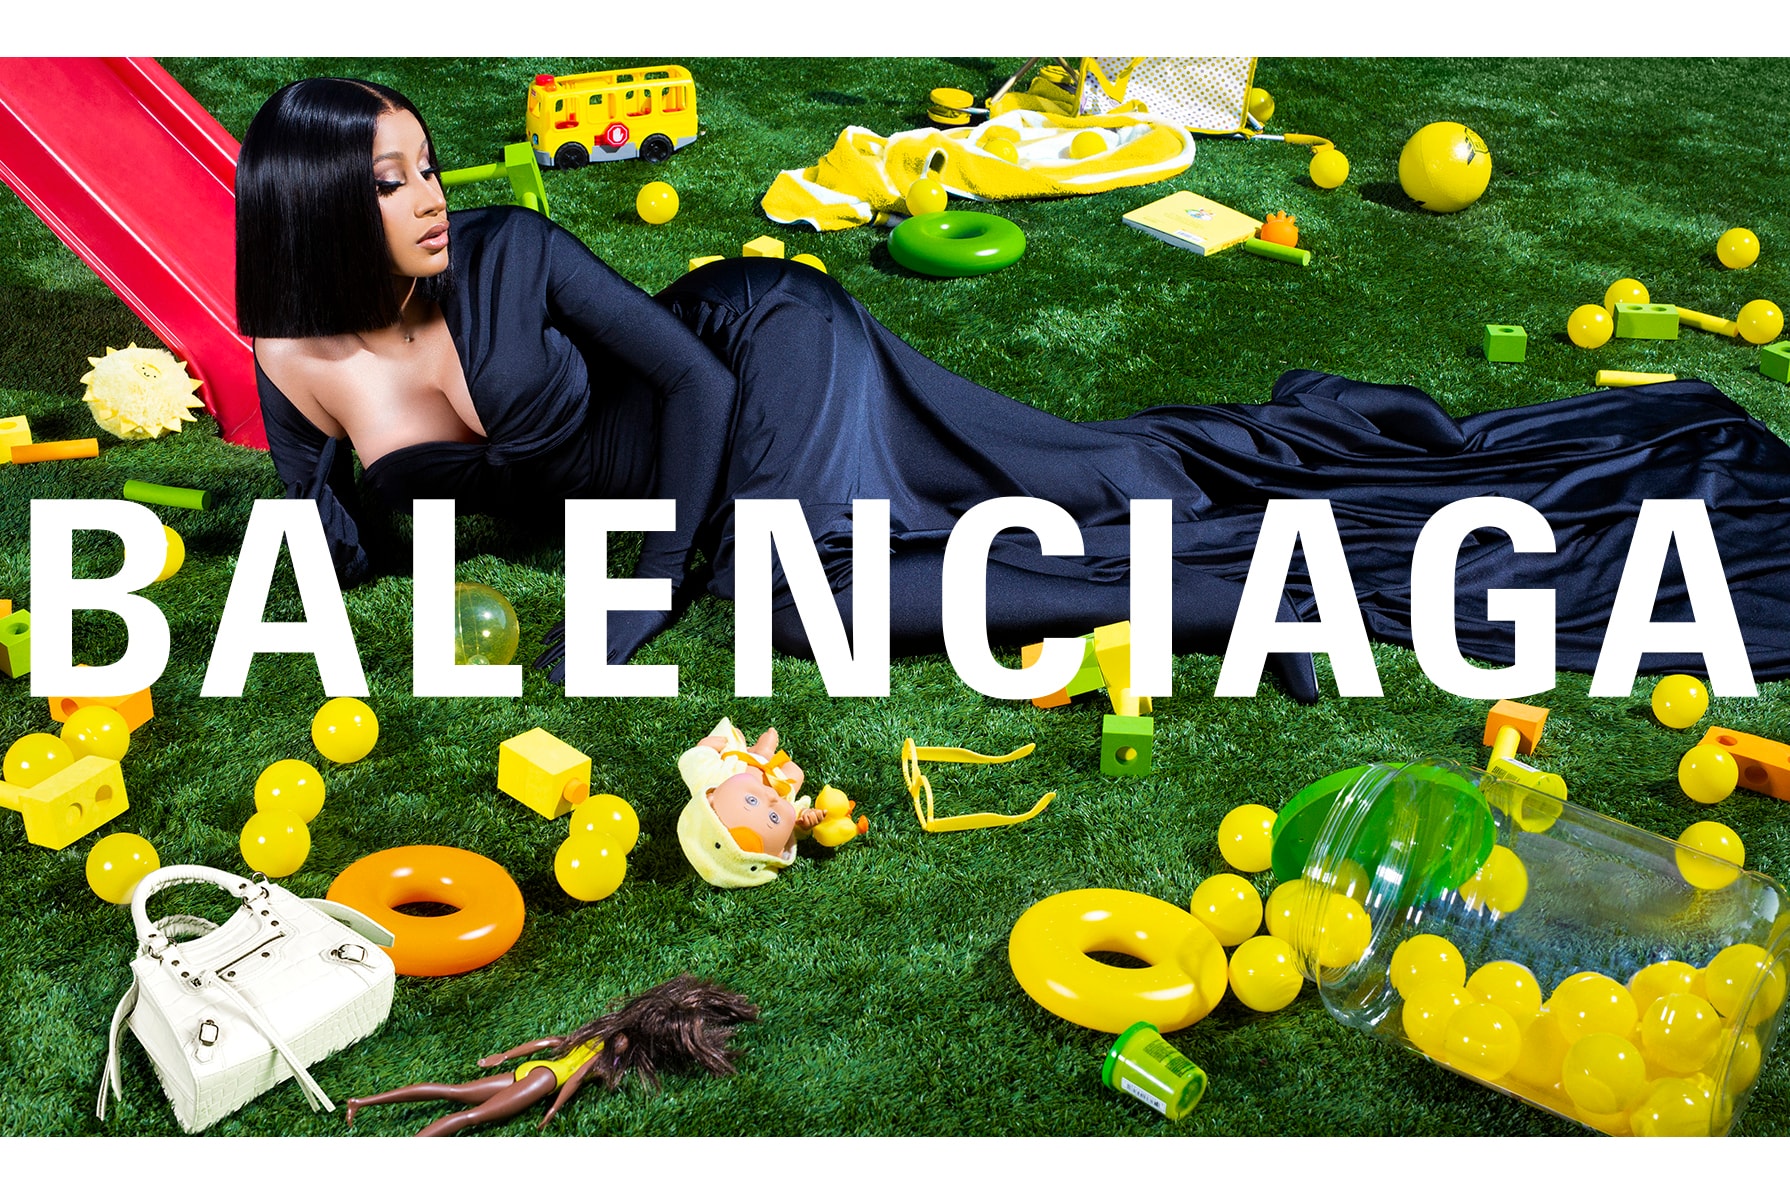 Cardi B Balenciaga Campaign Louvre Billboard Image Photoshoot Dress 